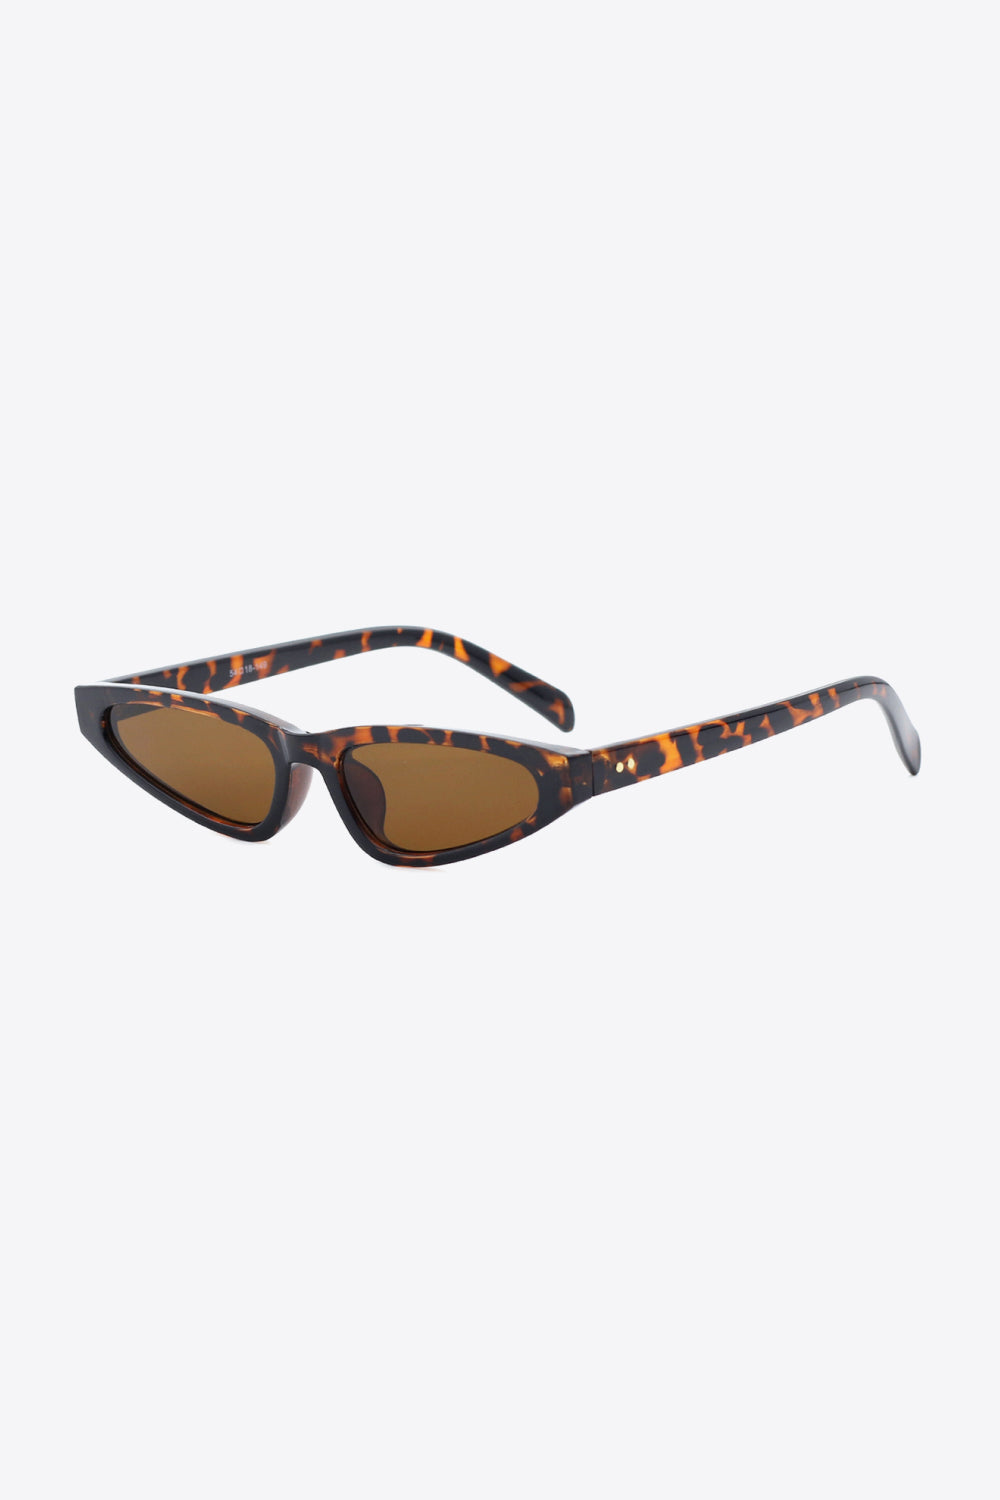 Polycarbonate Frame UV400 Cat Eye Sunglasses - Sunglasses - FITGGINS